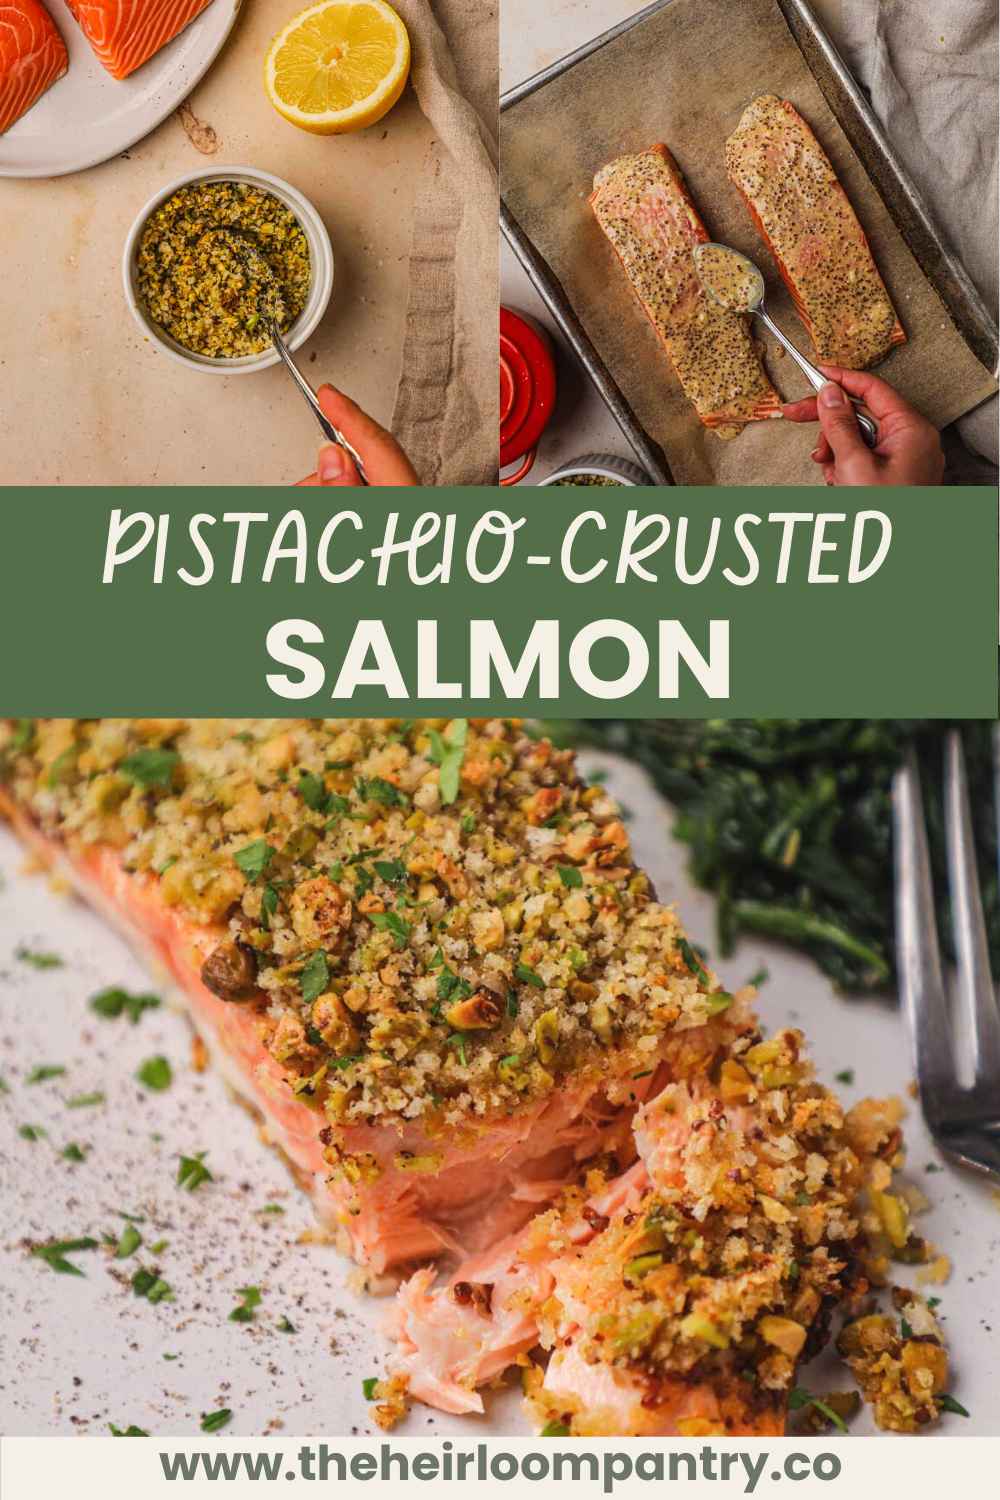 Panko and pistachio-crusted salmon filets with dijonnaise Pinterest pin.